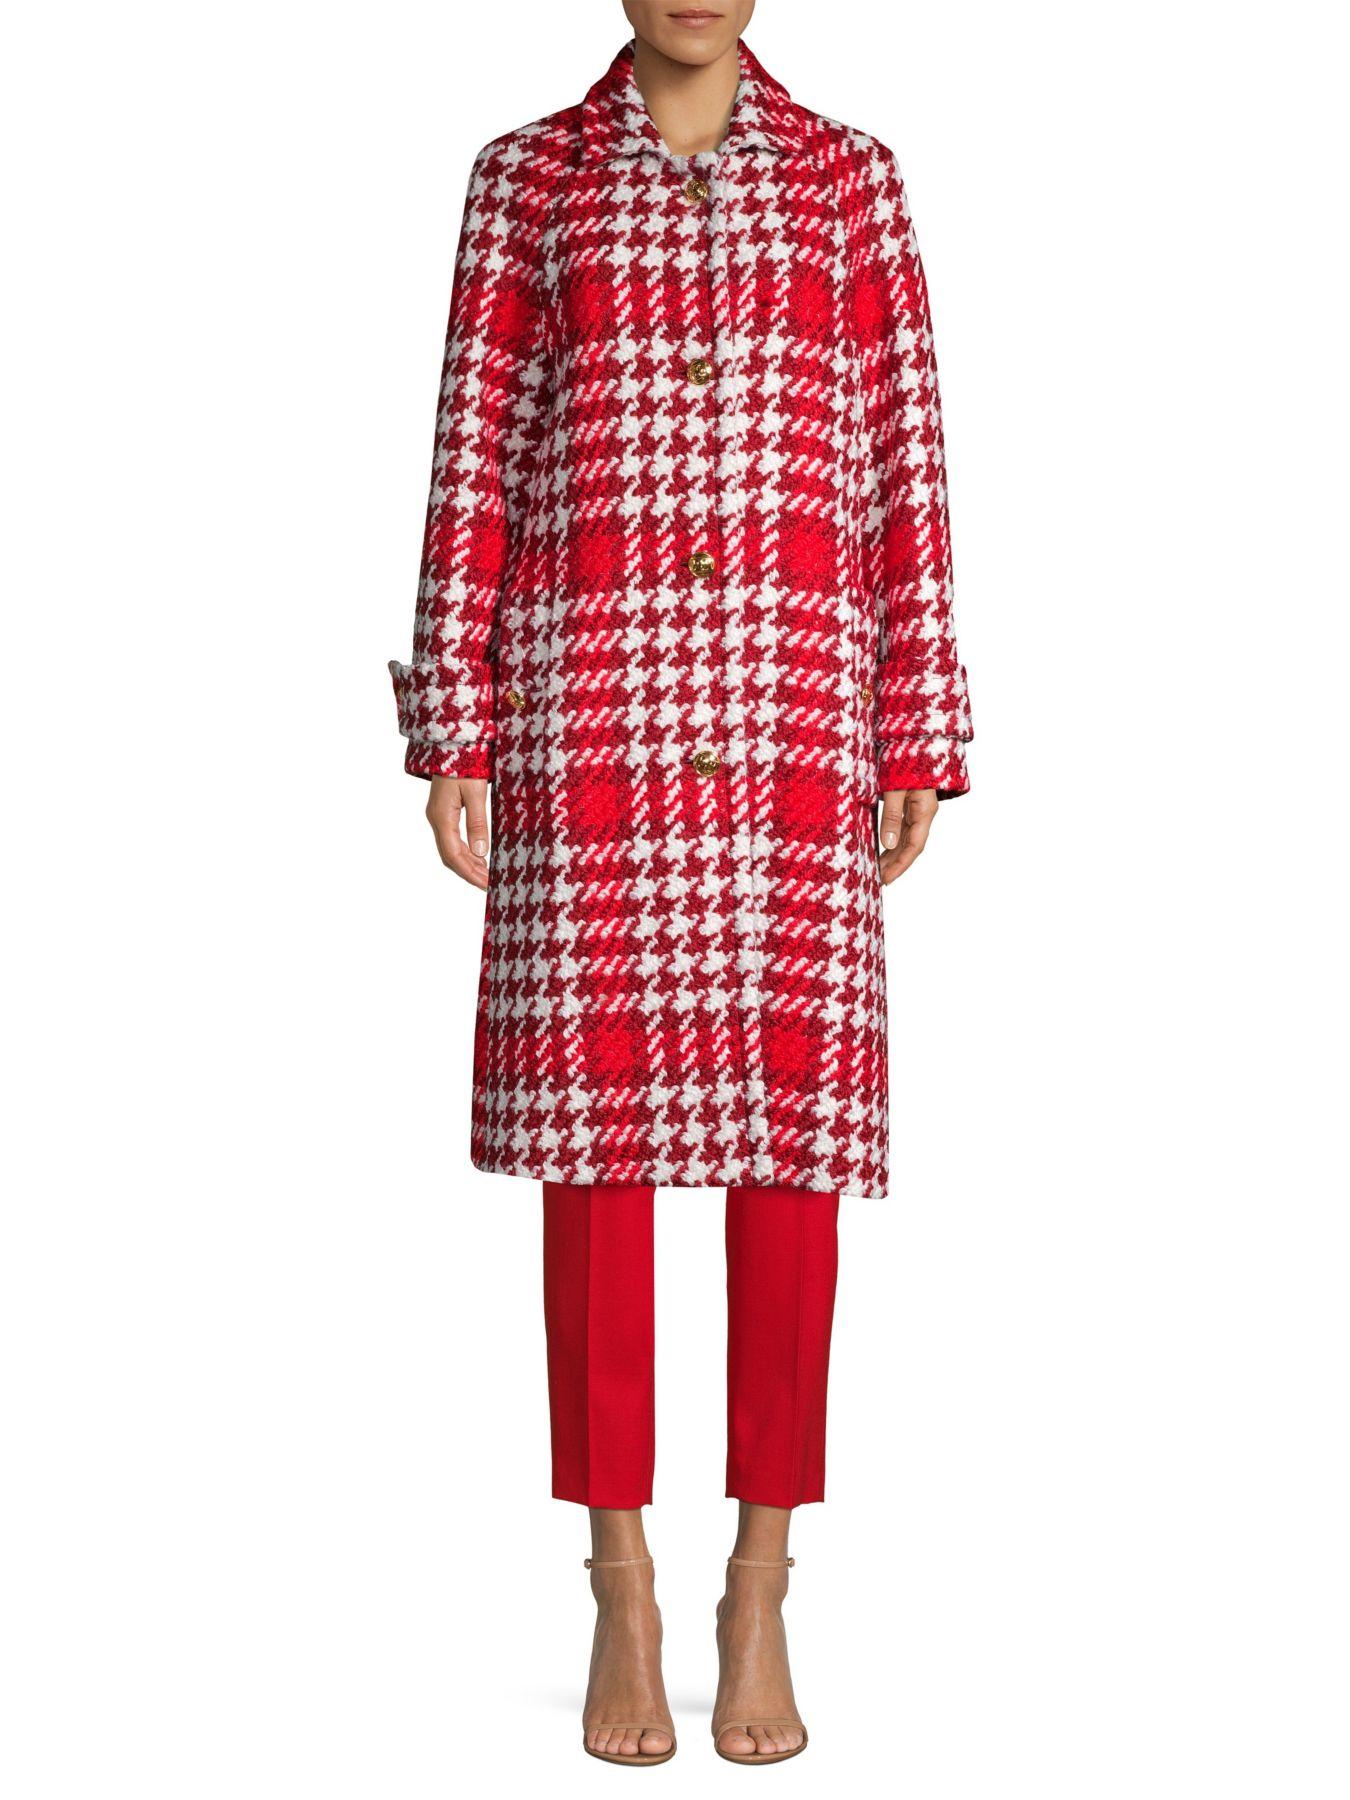 ESCADA Myrna Houndstooth Tweed Coat in Natural - Lyst